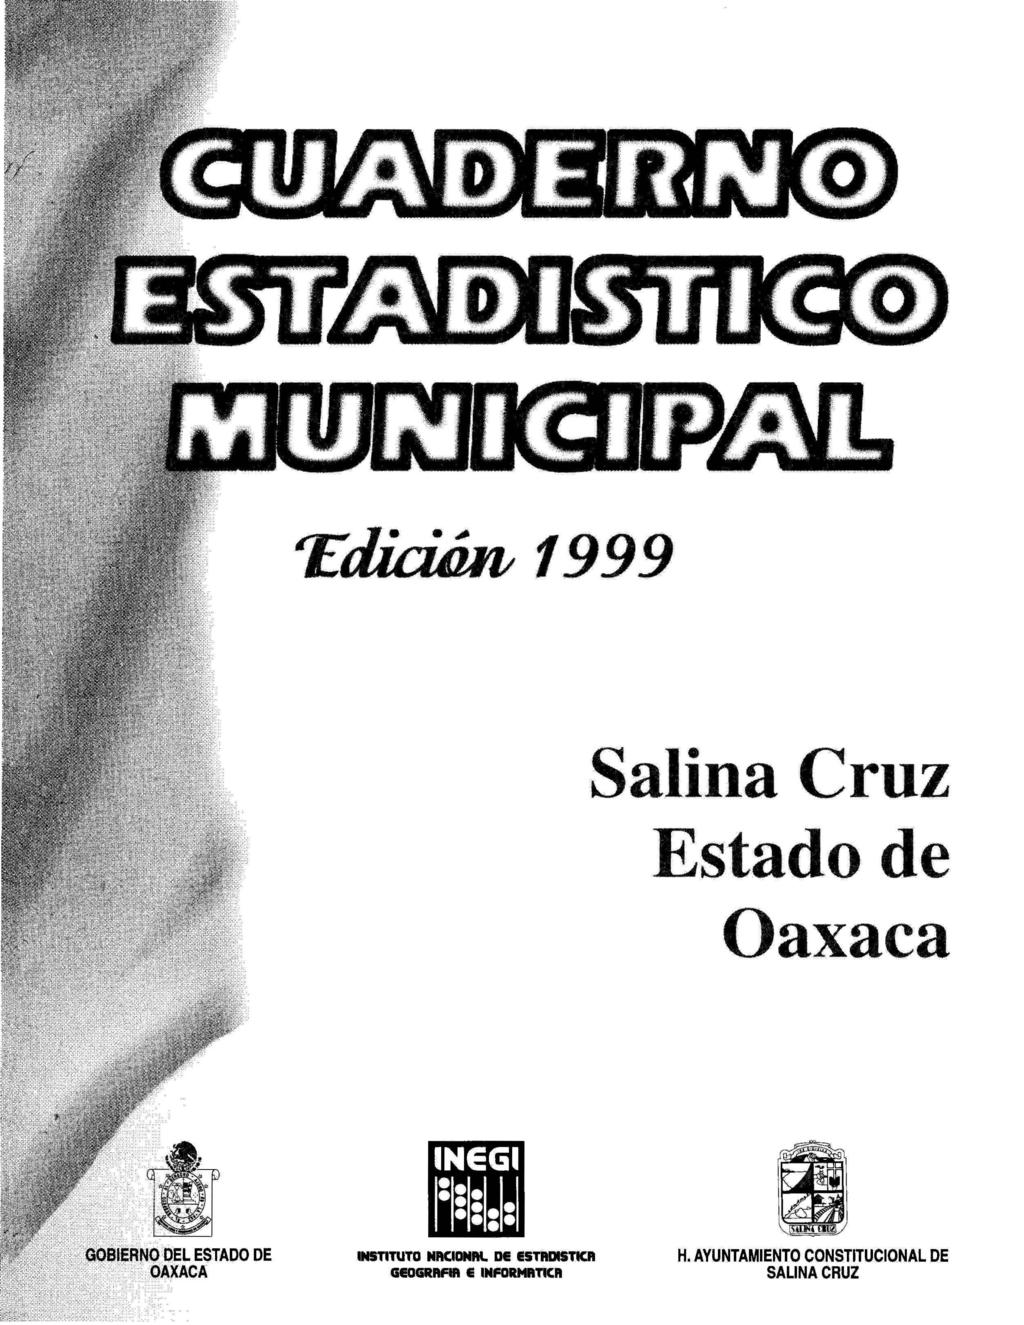 Ttlicüin 1999 Salina Cruz Estado de Oaxaca INSTITUTO NRCIONAl DI